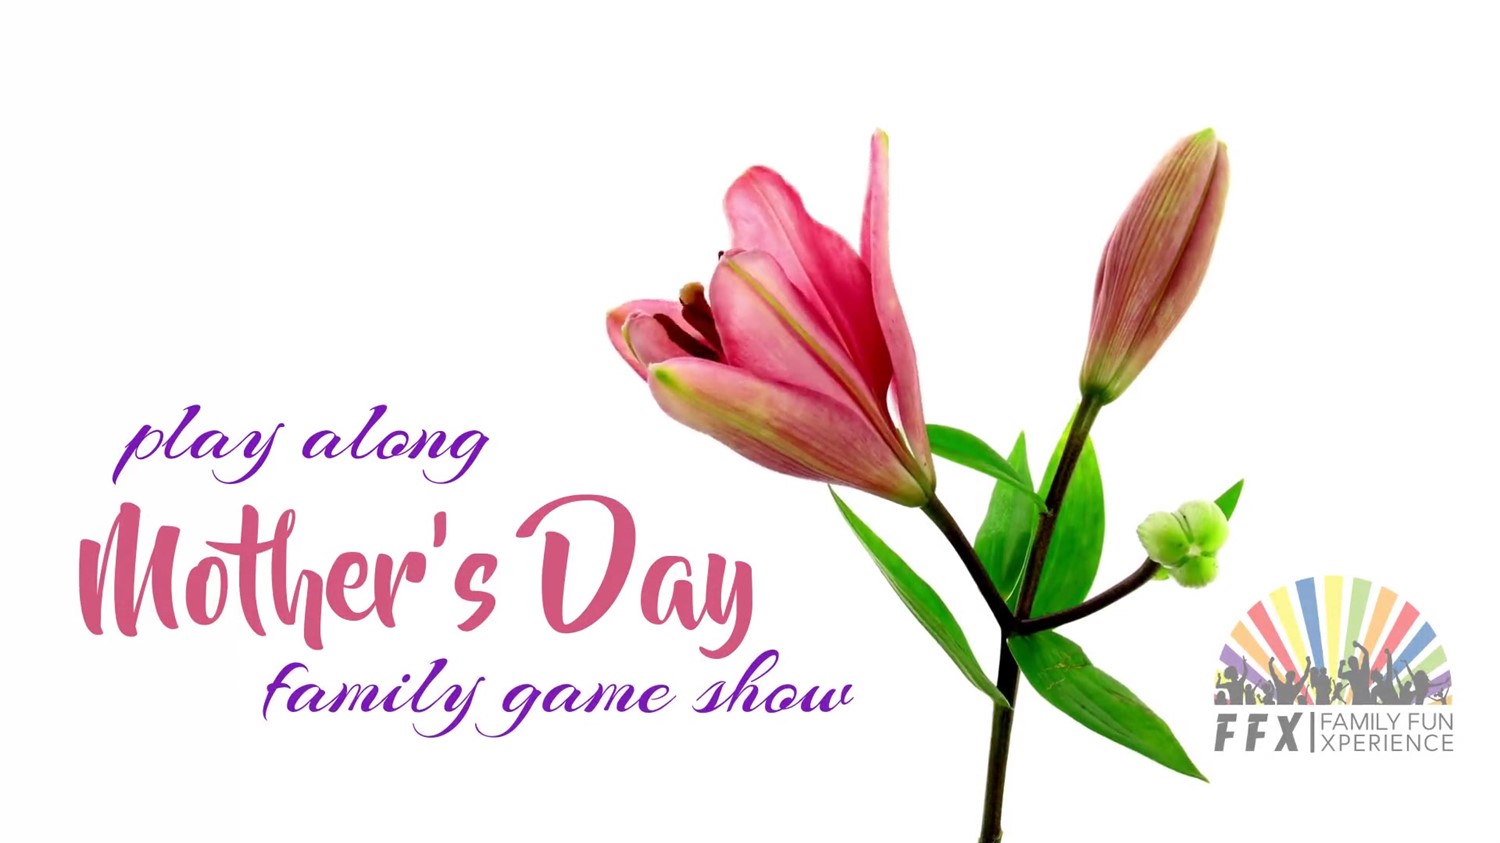 Mom's Day Family Game Show MATINEE TIME! on may. 12, 15:00@FFX Theatre - Elegir asientoCompra entradas y obtén información enFamily Fun Xperience tickets.ffxshow.org